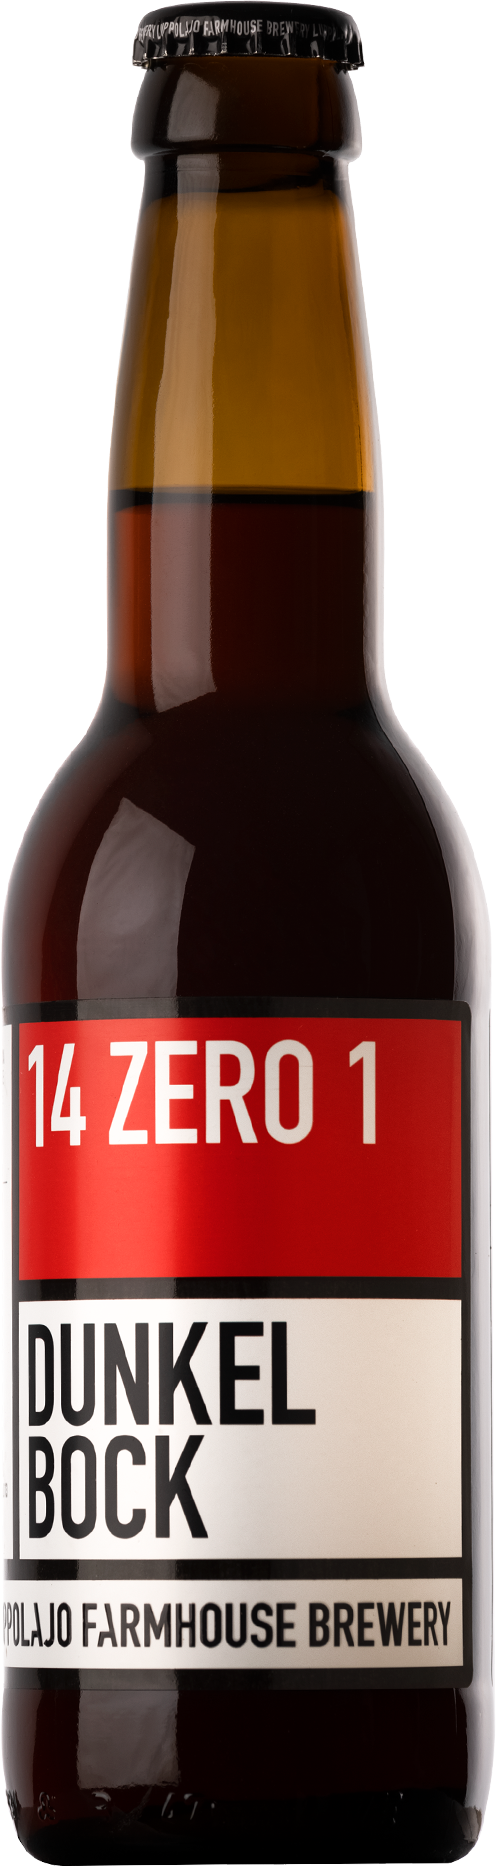 14 ZERO 1 Dunkel Bock pack 12 bottiglie 33 cl